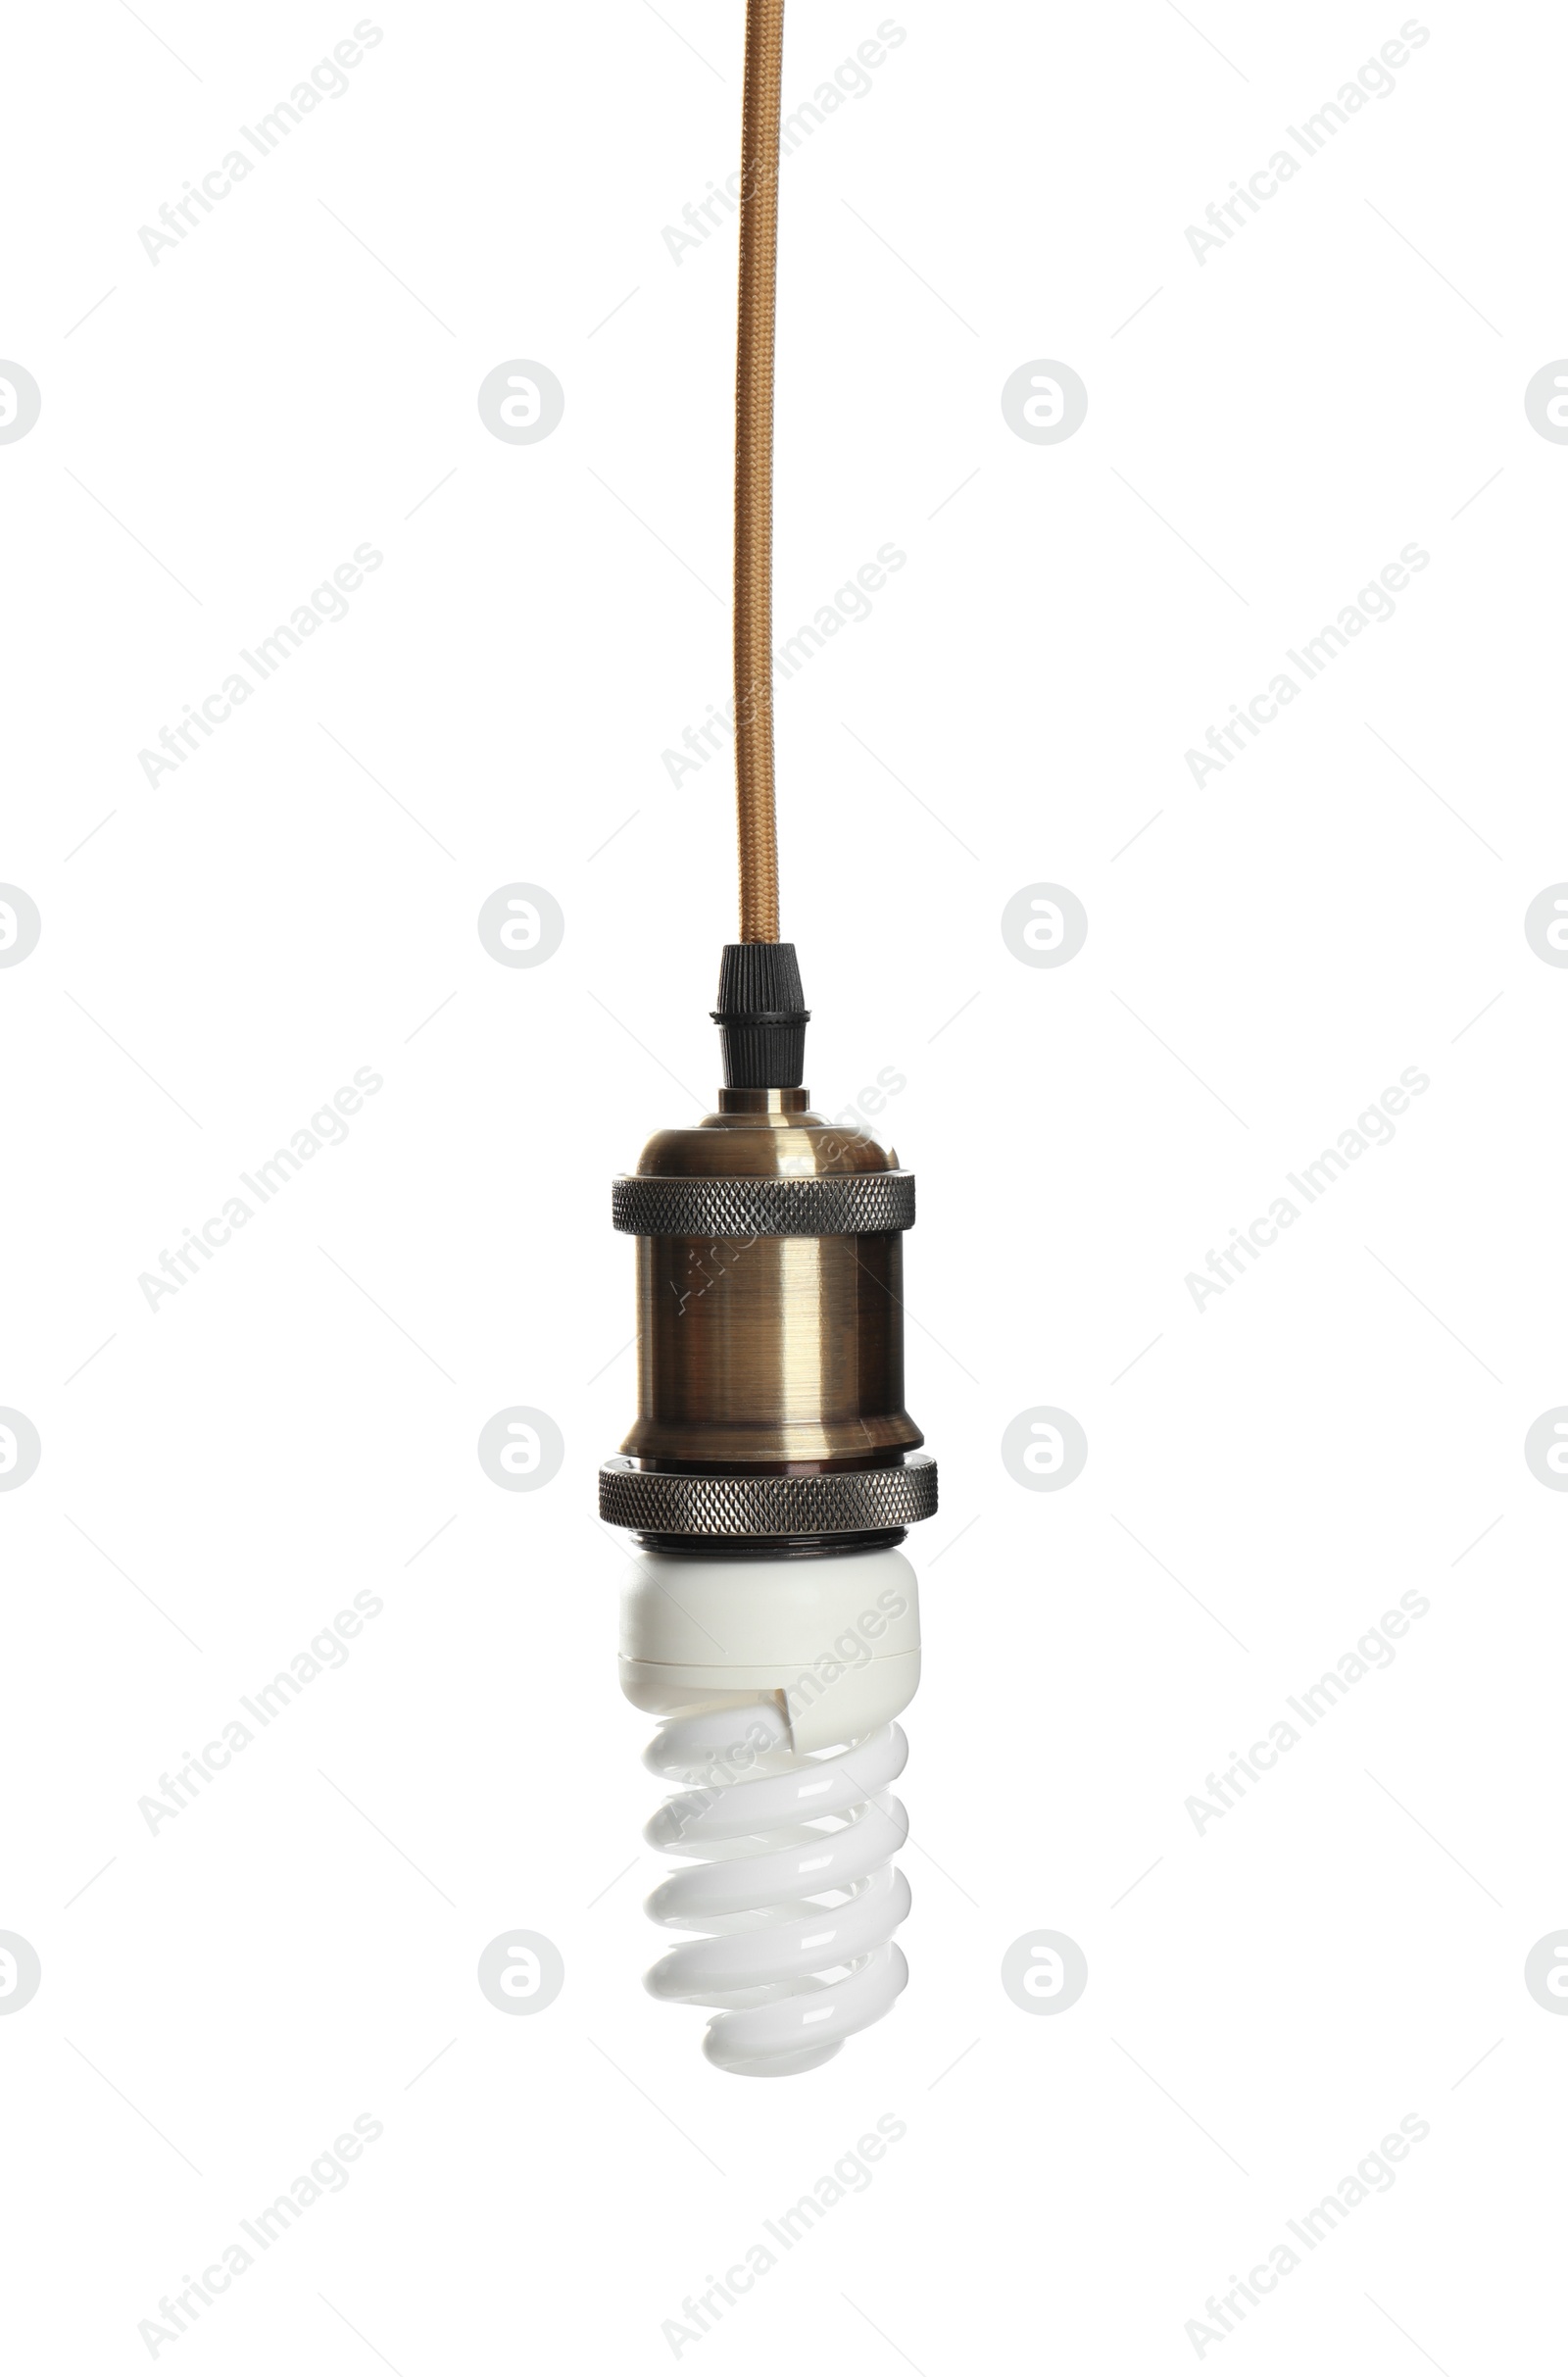 Photo of New spiral light bulb for lamp on white background